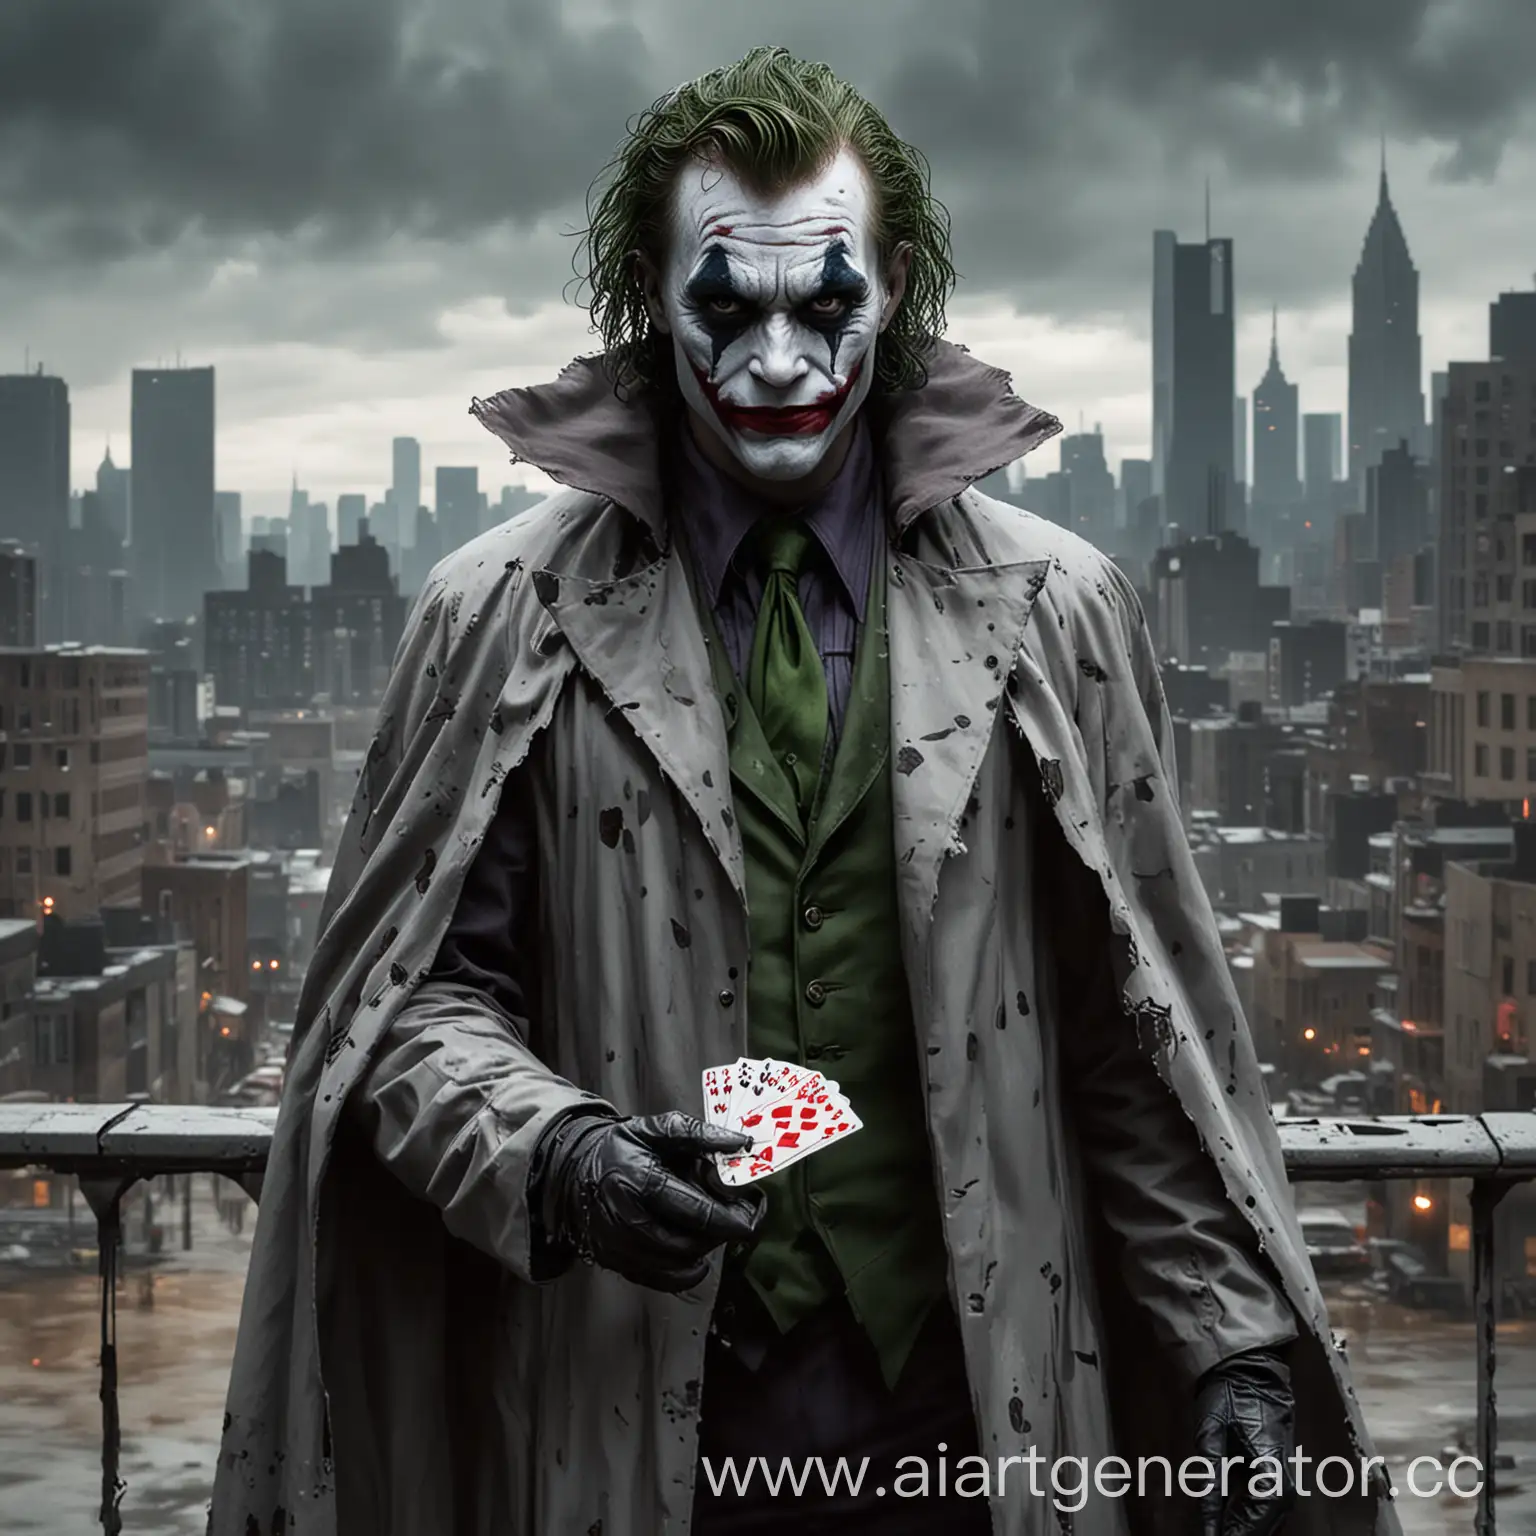 Mysterious-Joker-Figure-Holding-a-Card-in-Dark-Cityscape